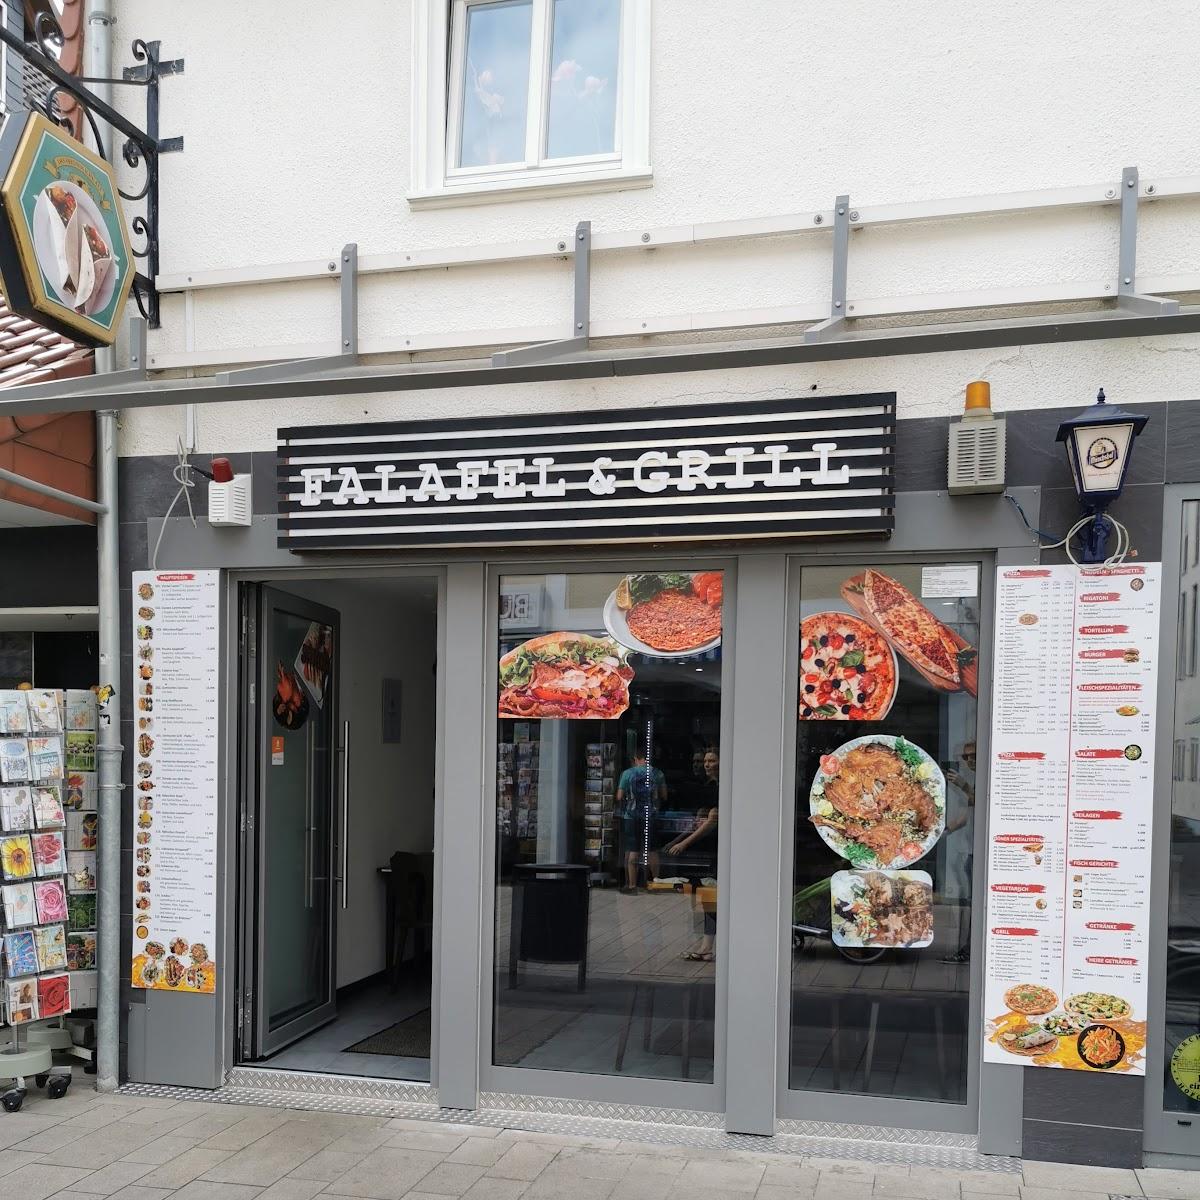 Restaurant "Falafel & Grill" in Hofgeismar